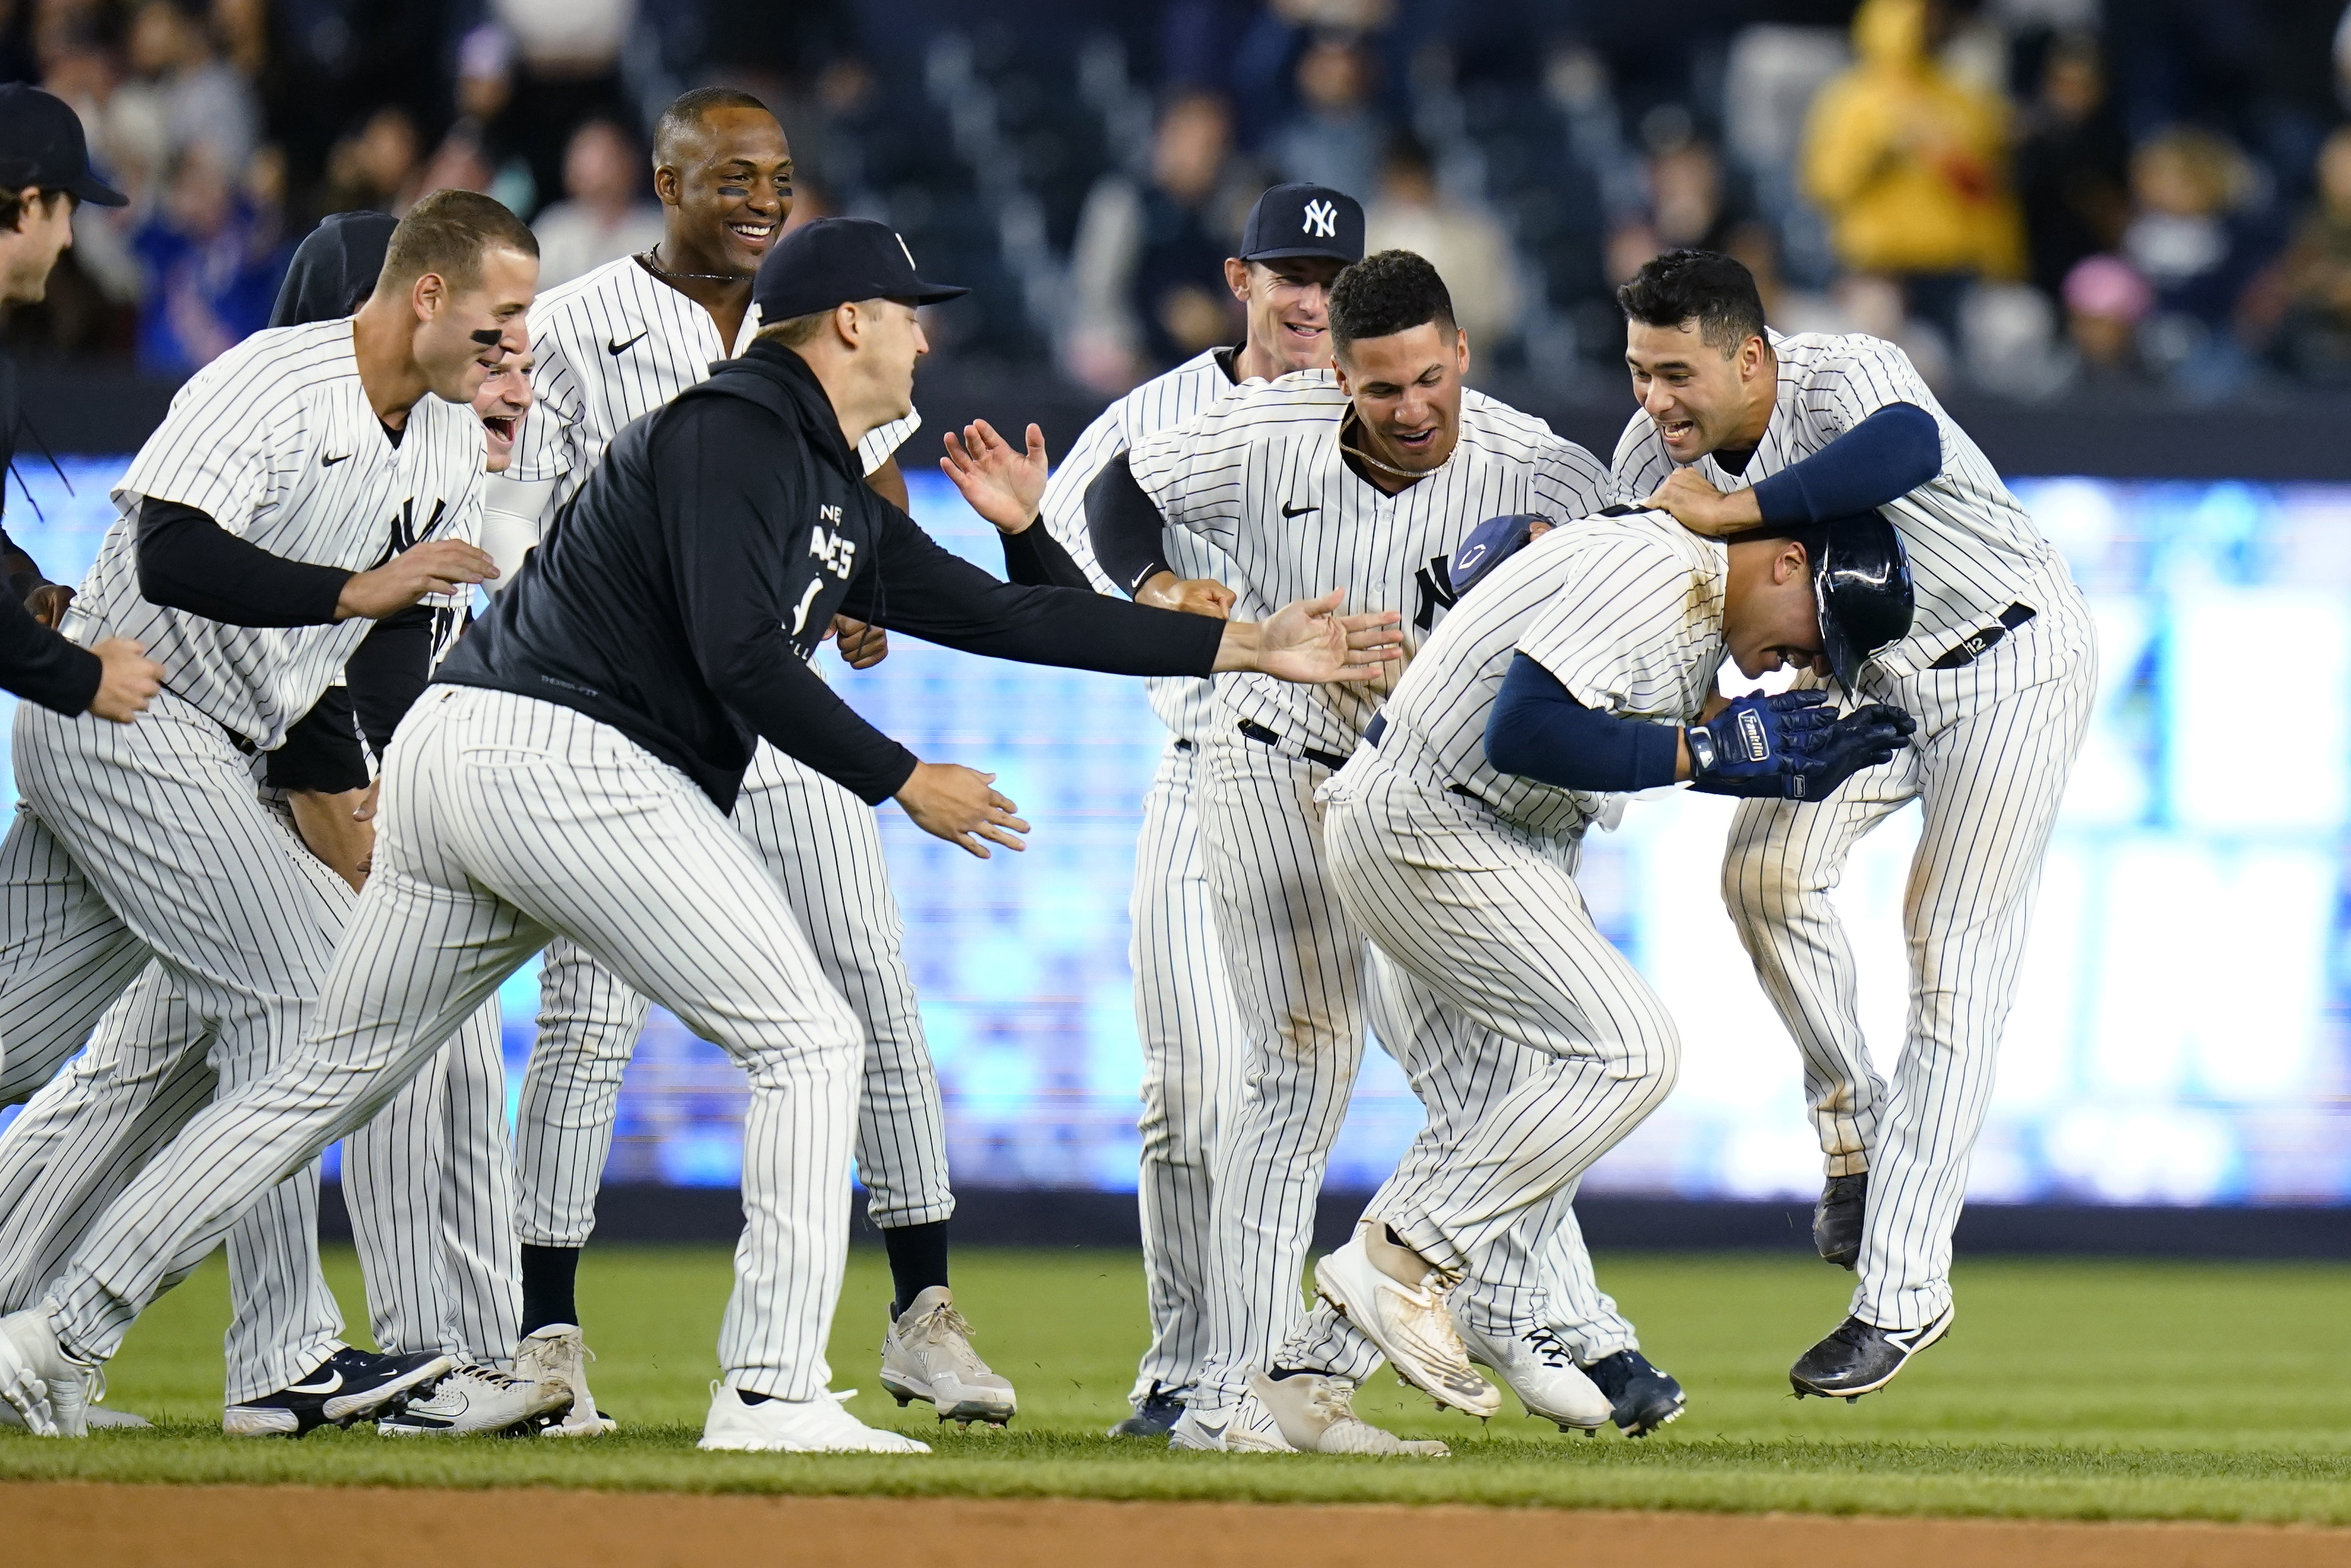 Jose Trevino injury update: Yankees C set to undergo season-ending